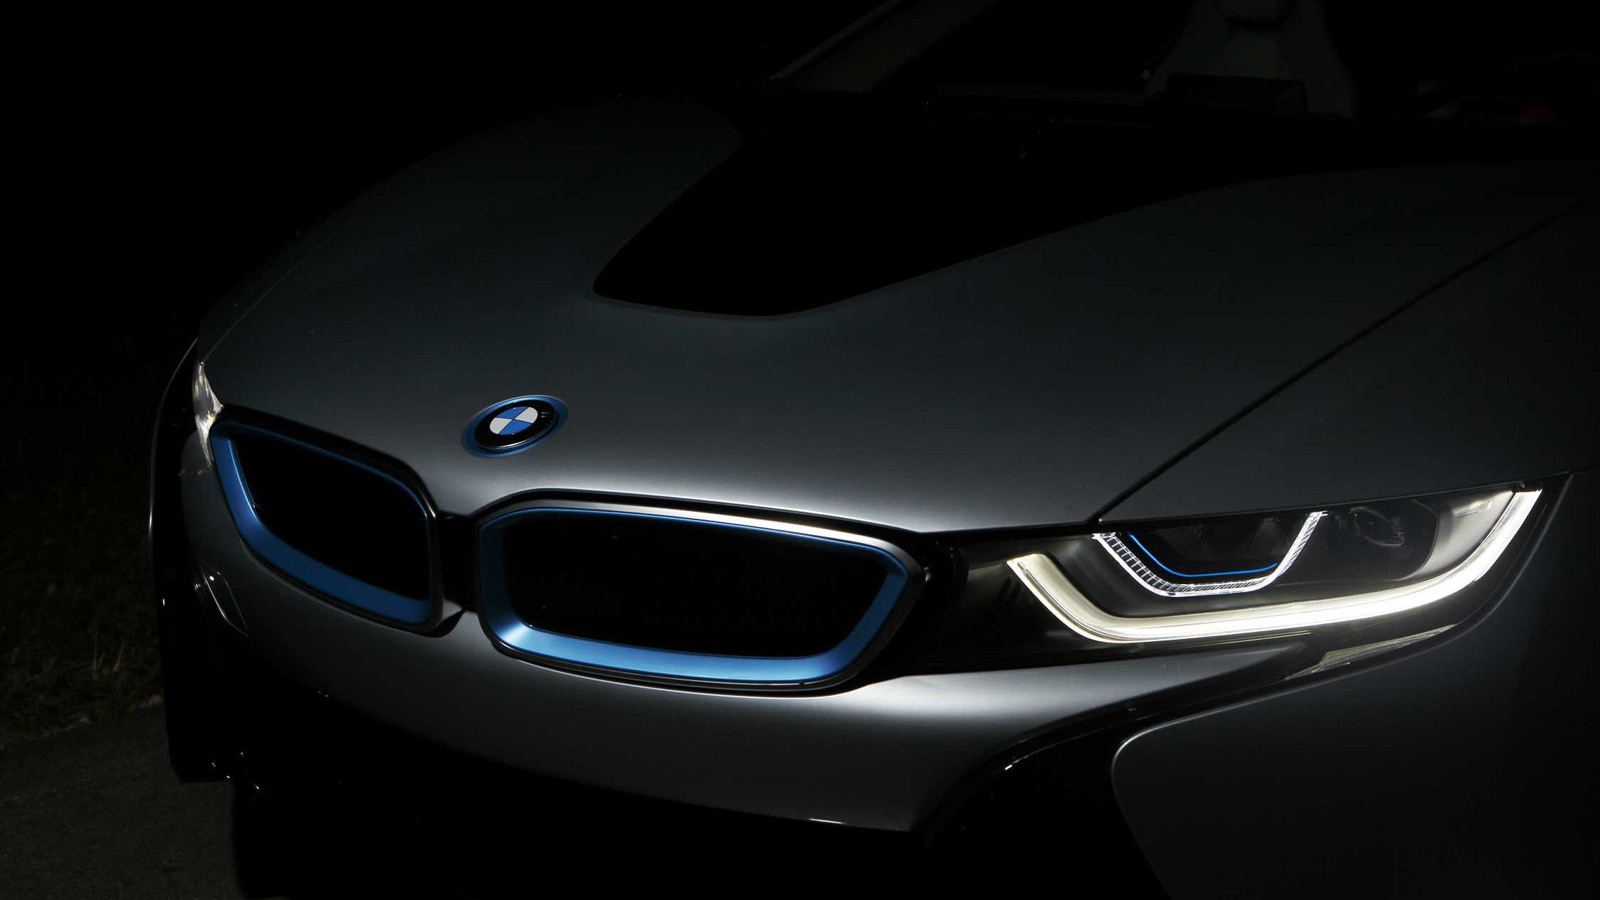 2015 BMW i8 laser headlights